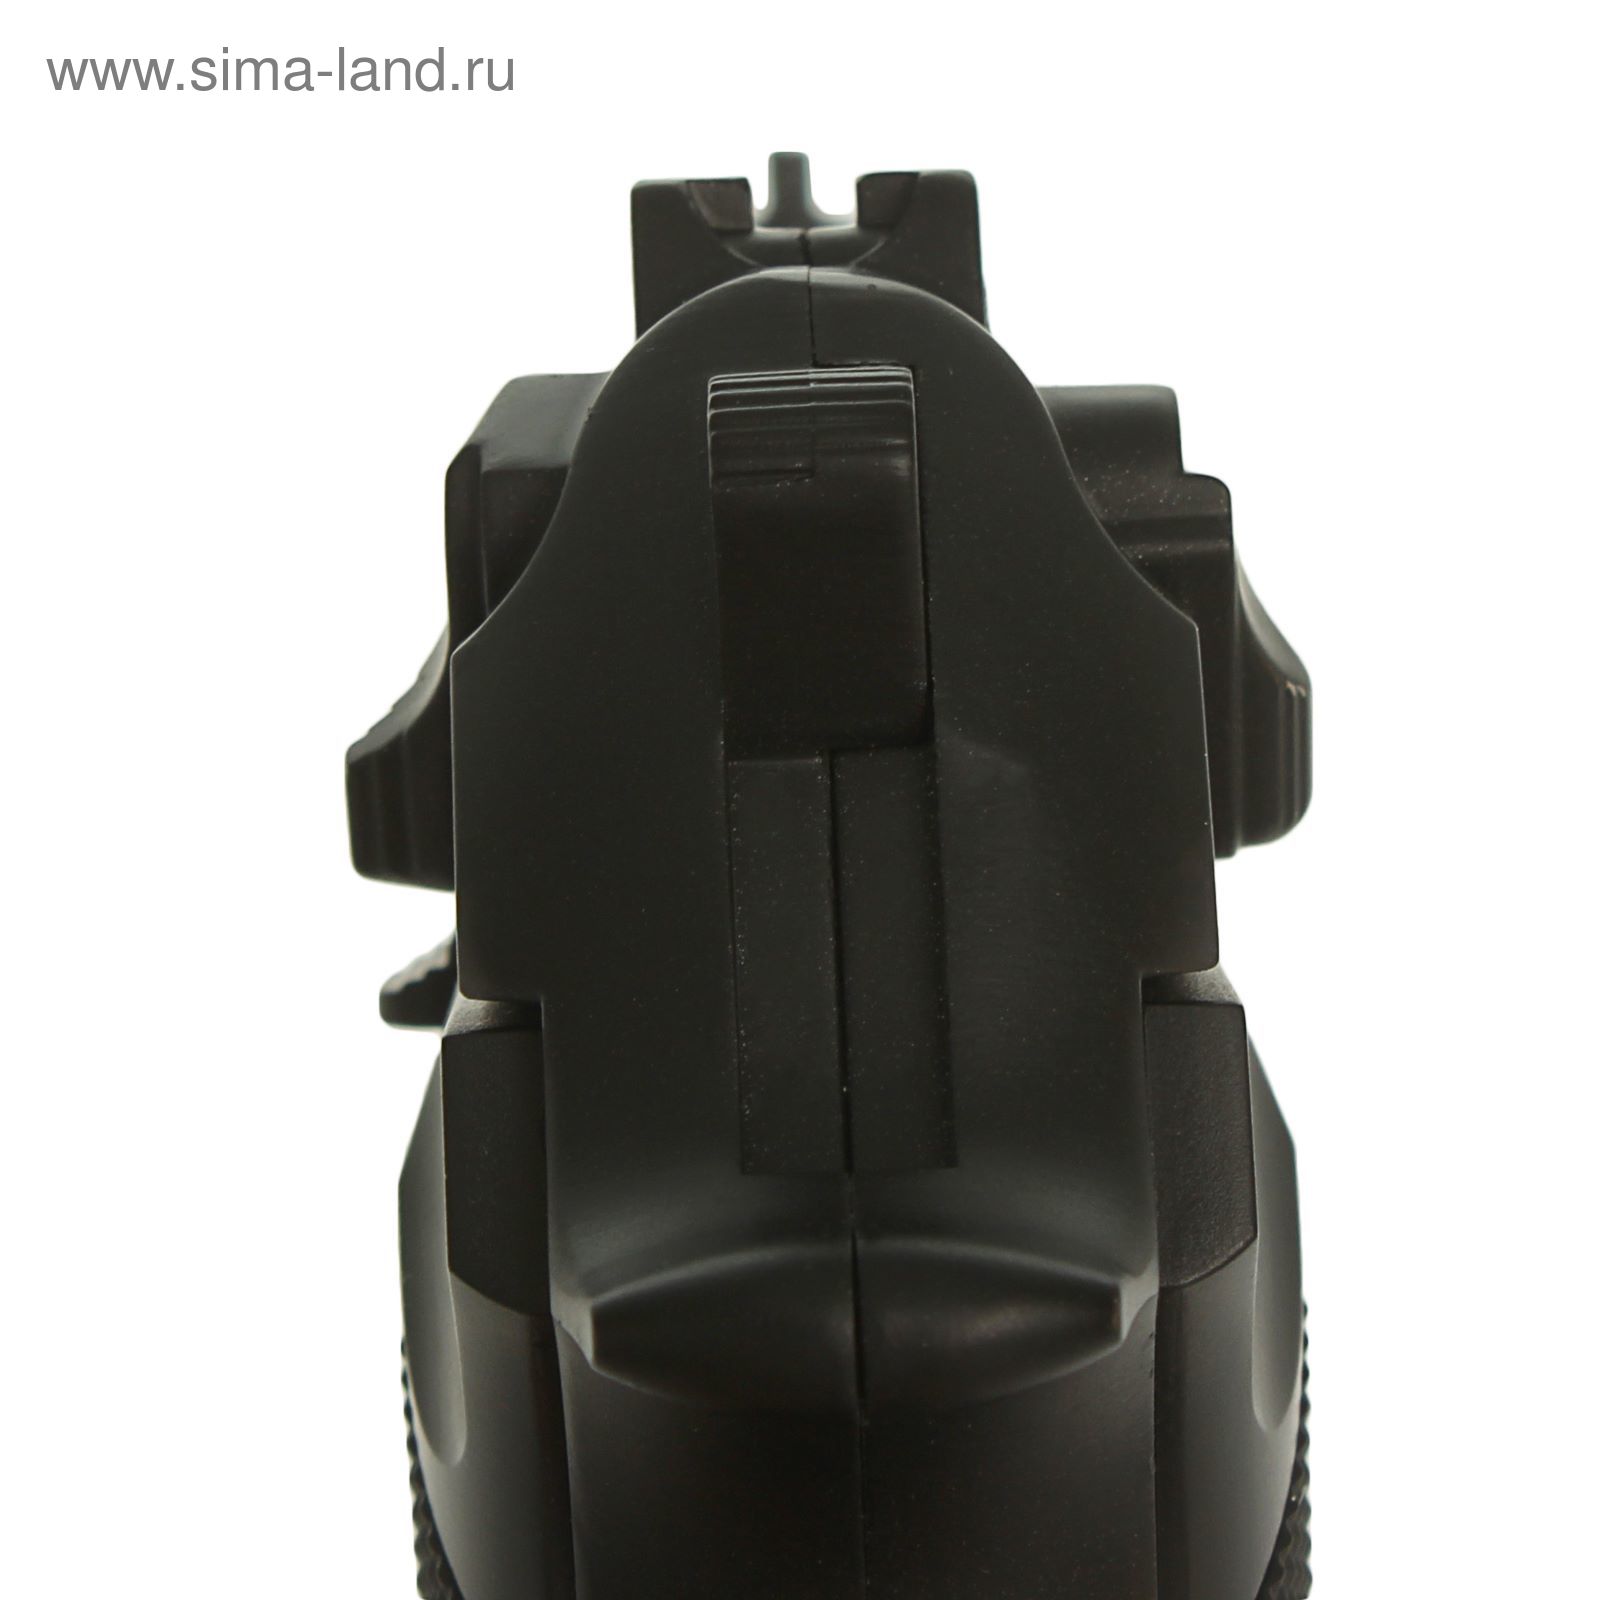 Пистолет пневм. Stalker S92ME (аналог "Beretta 92") 4,5мм, металл, 120 м/с, черный